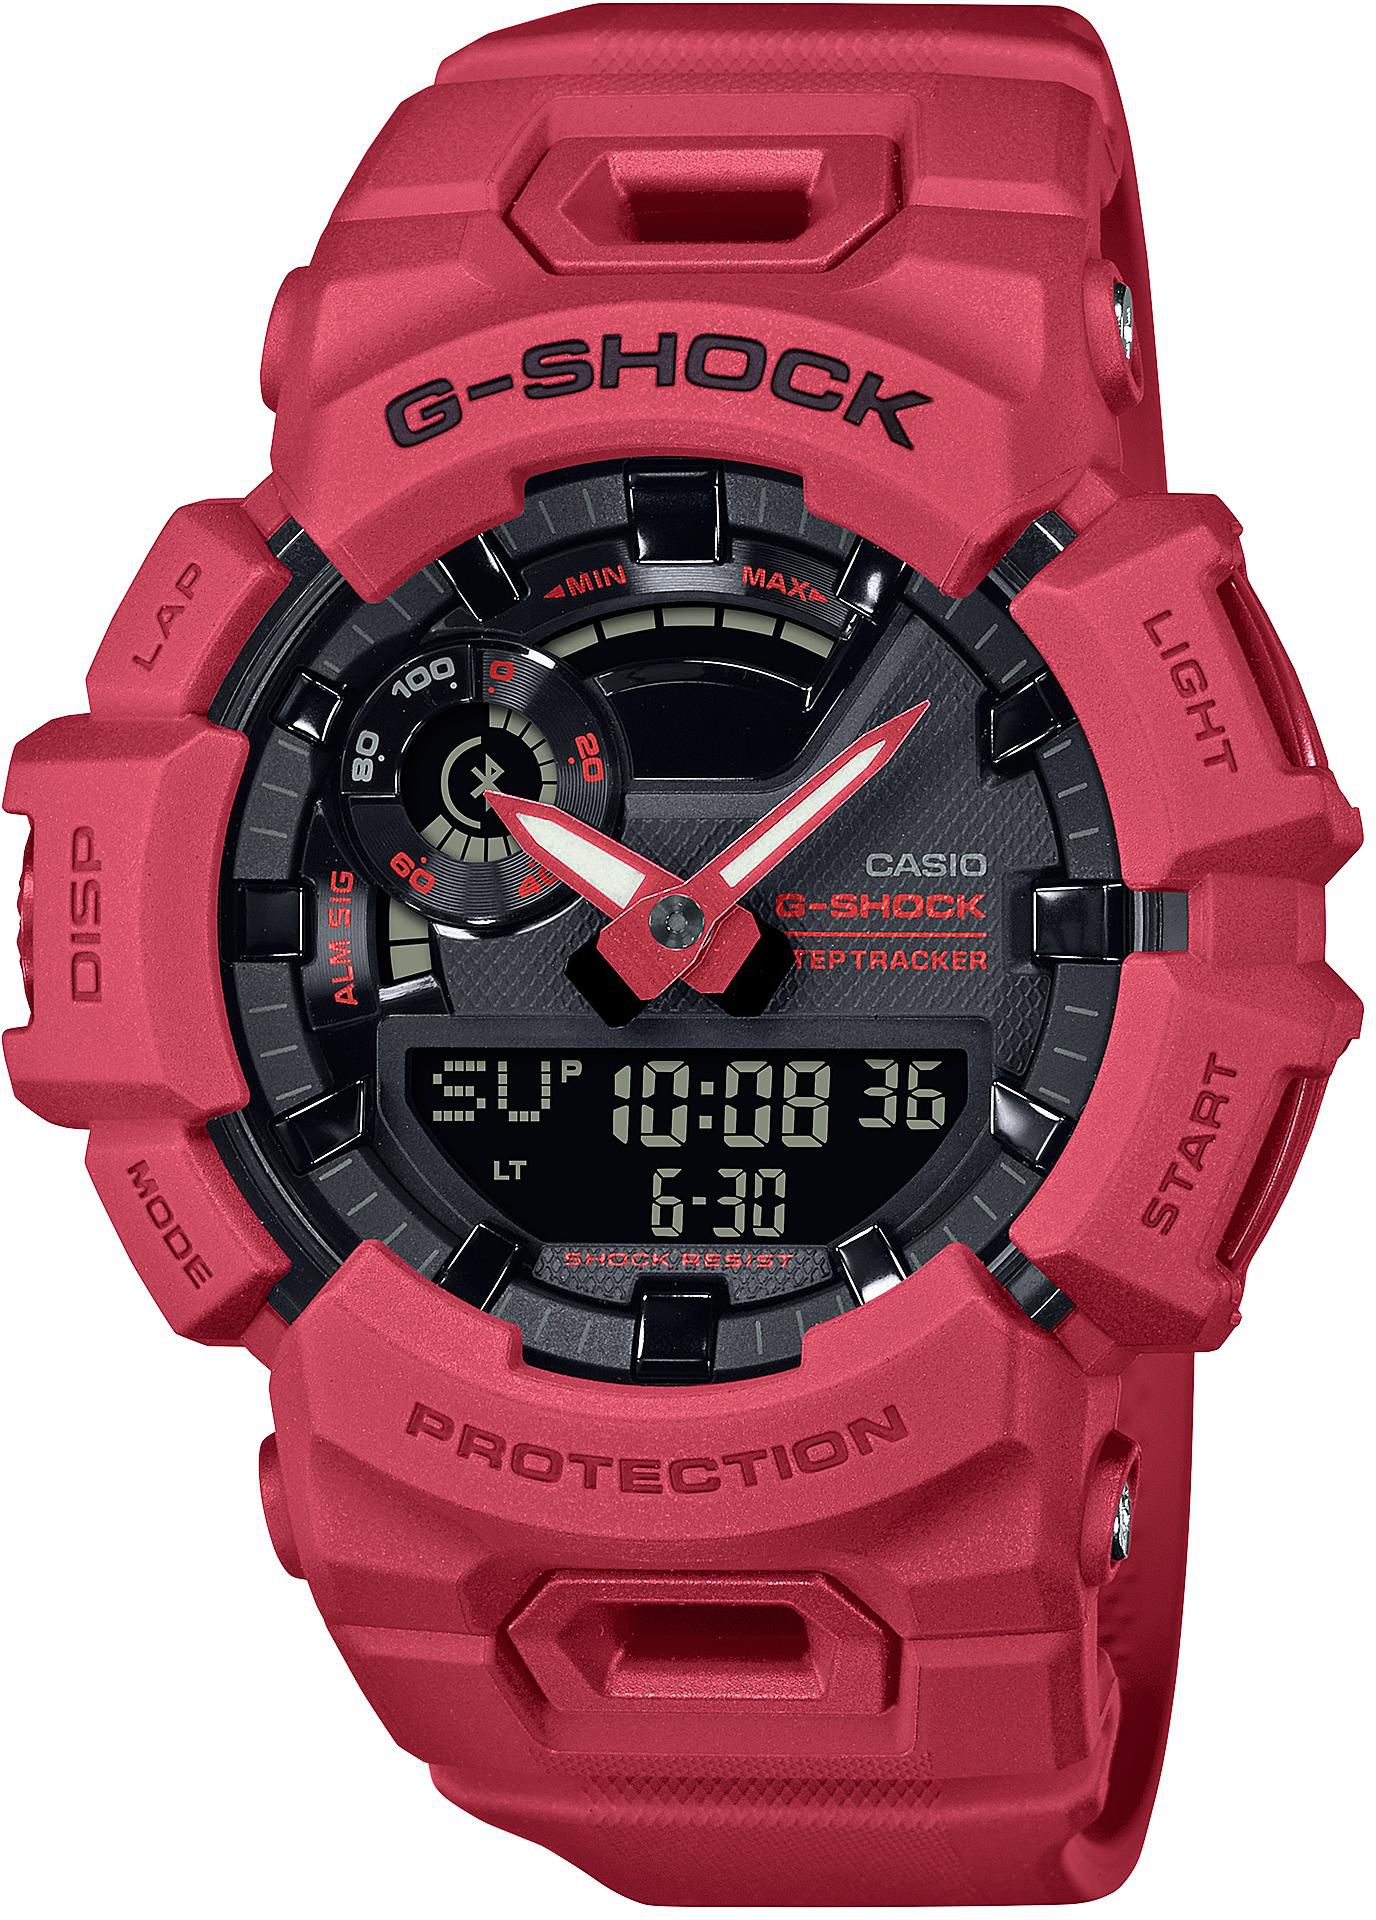 Men's Watches CASIO G-SHOCK GBA-900RD-4ADR